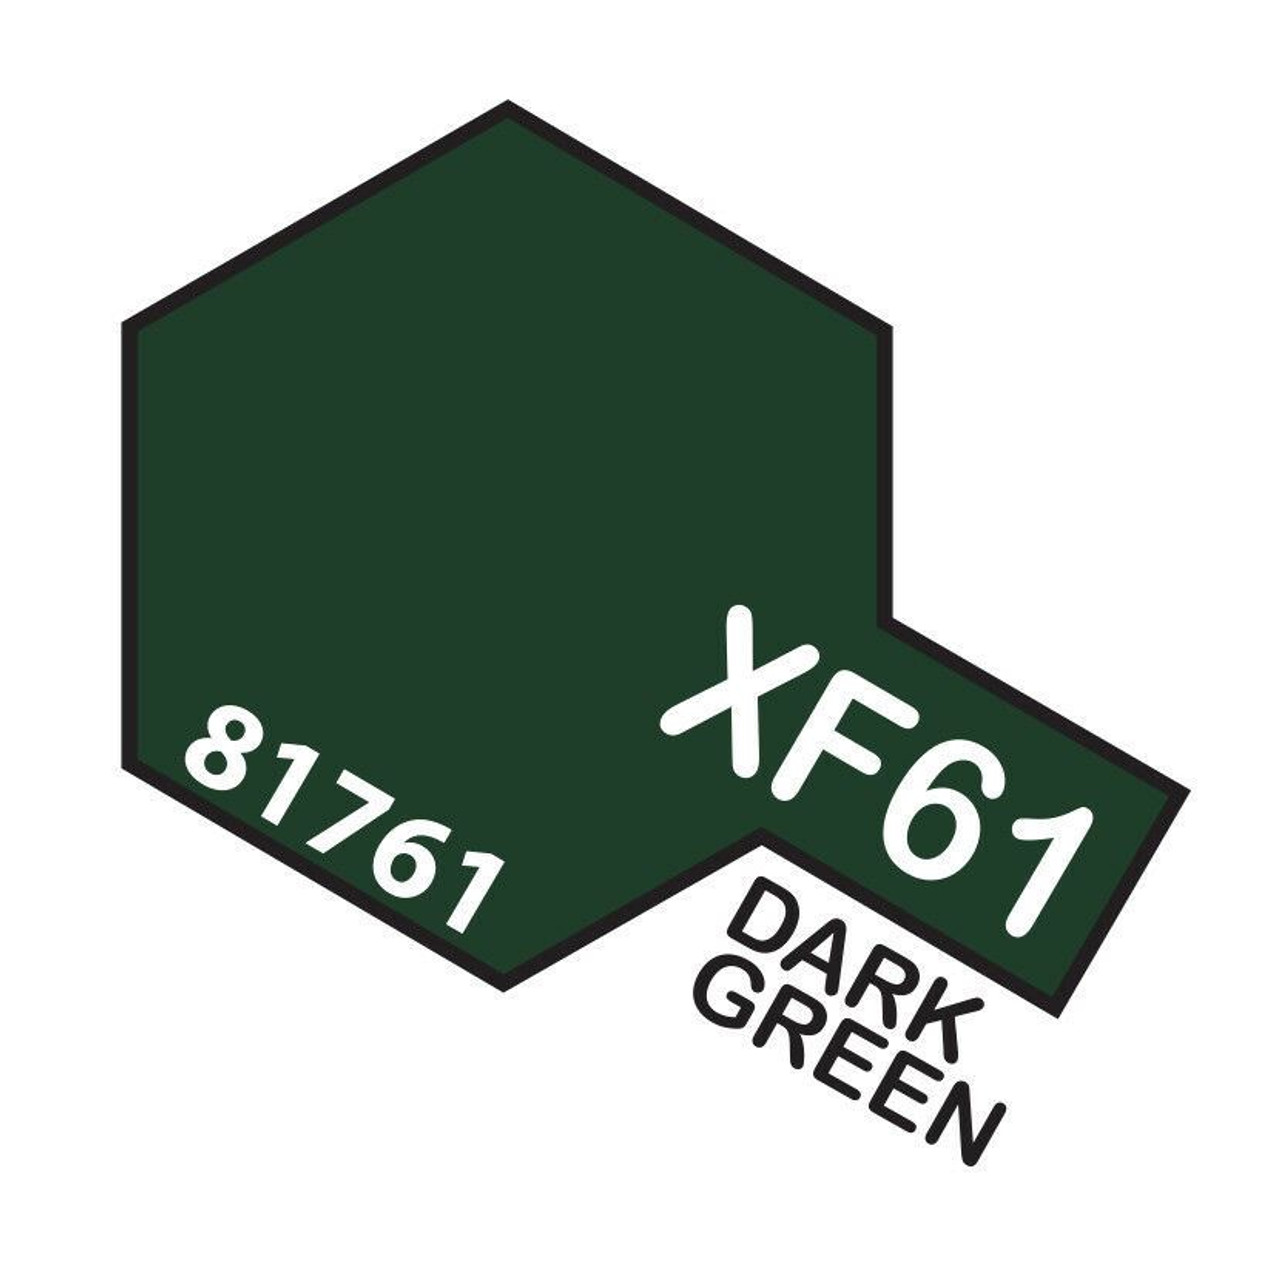 Tamiya 10ml  XF-61 Dark Green